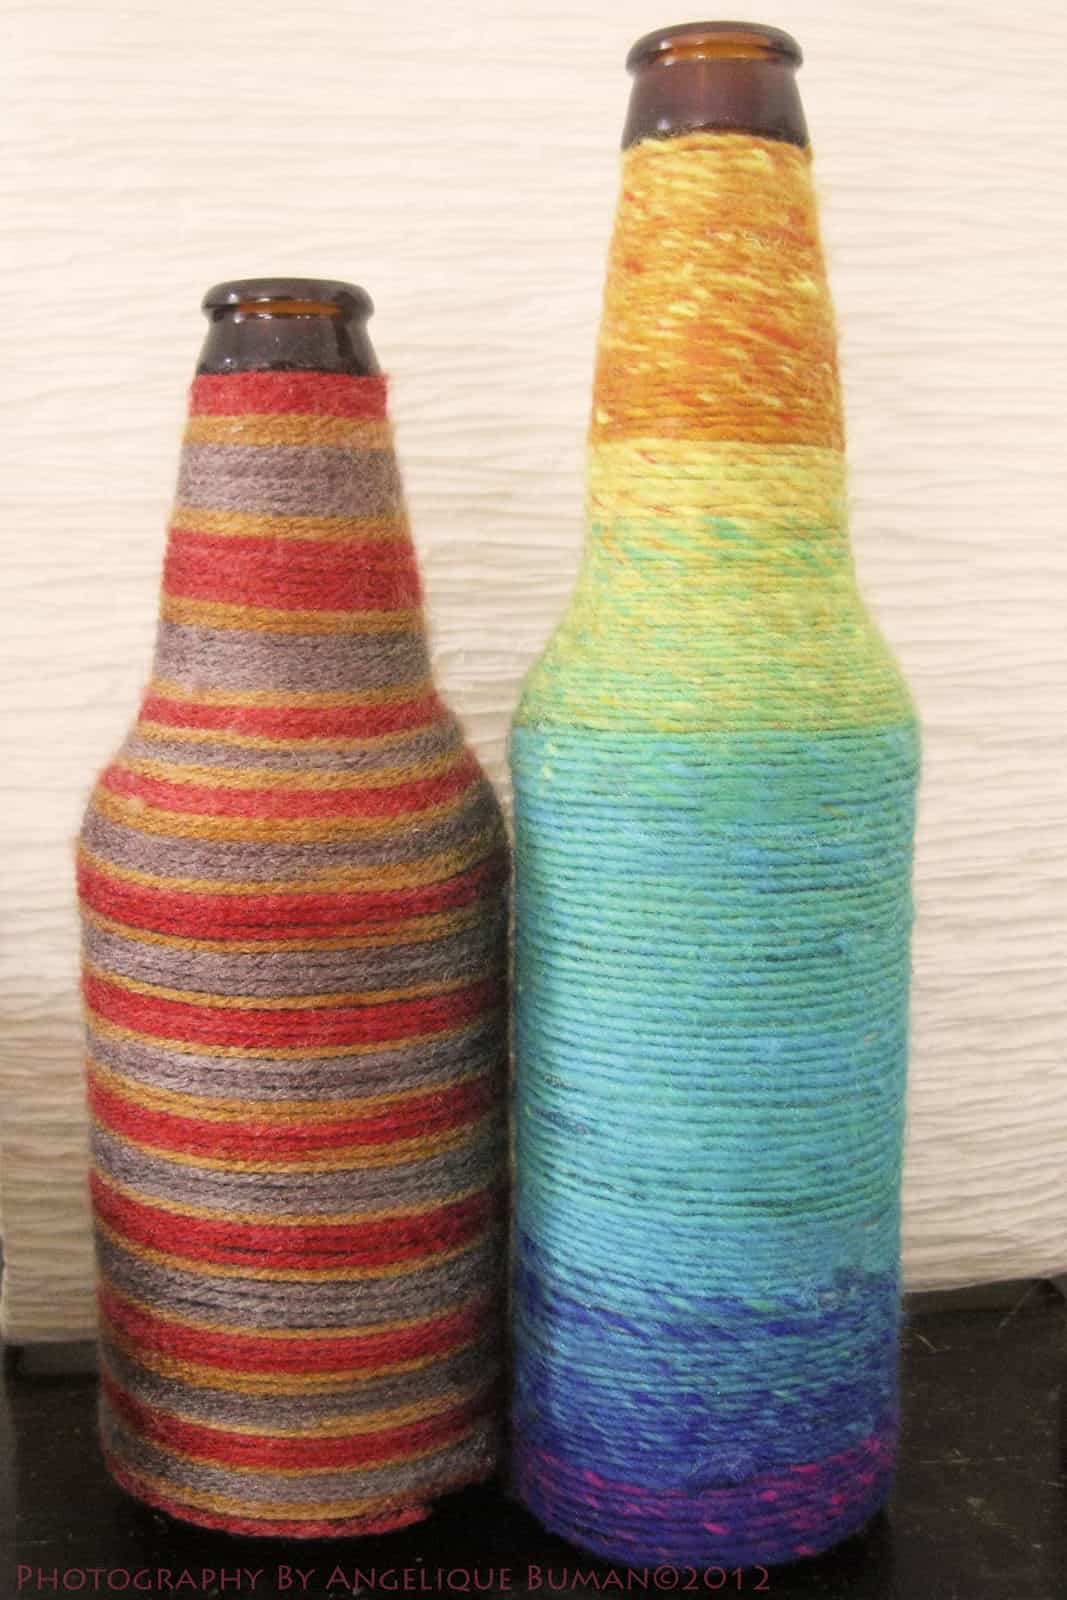 Yarn wrapped bottles